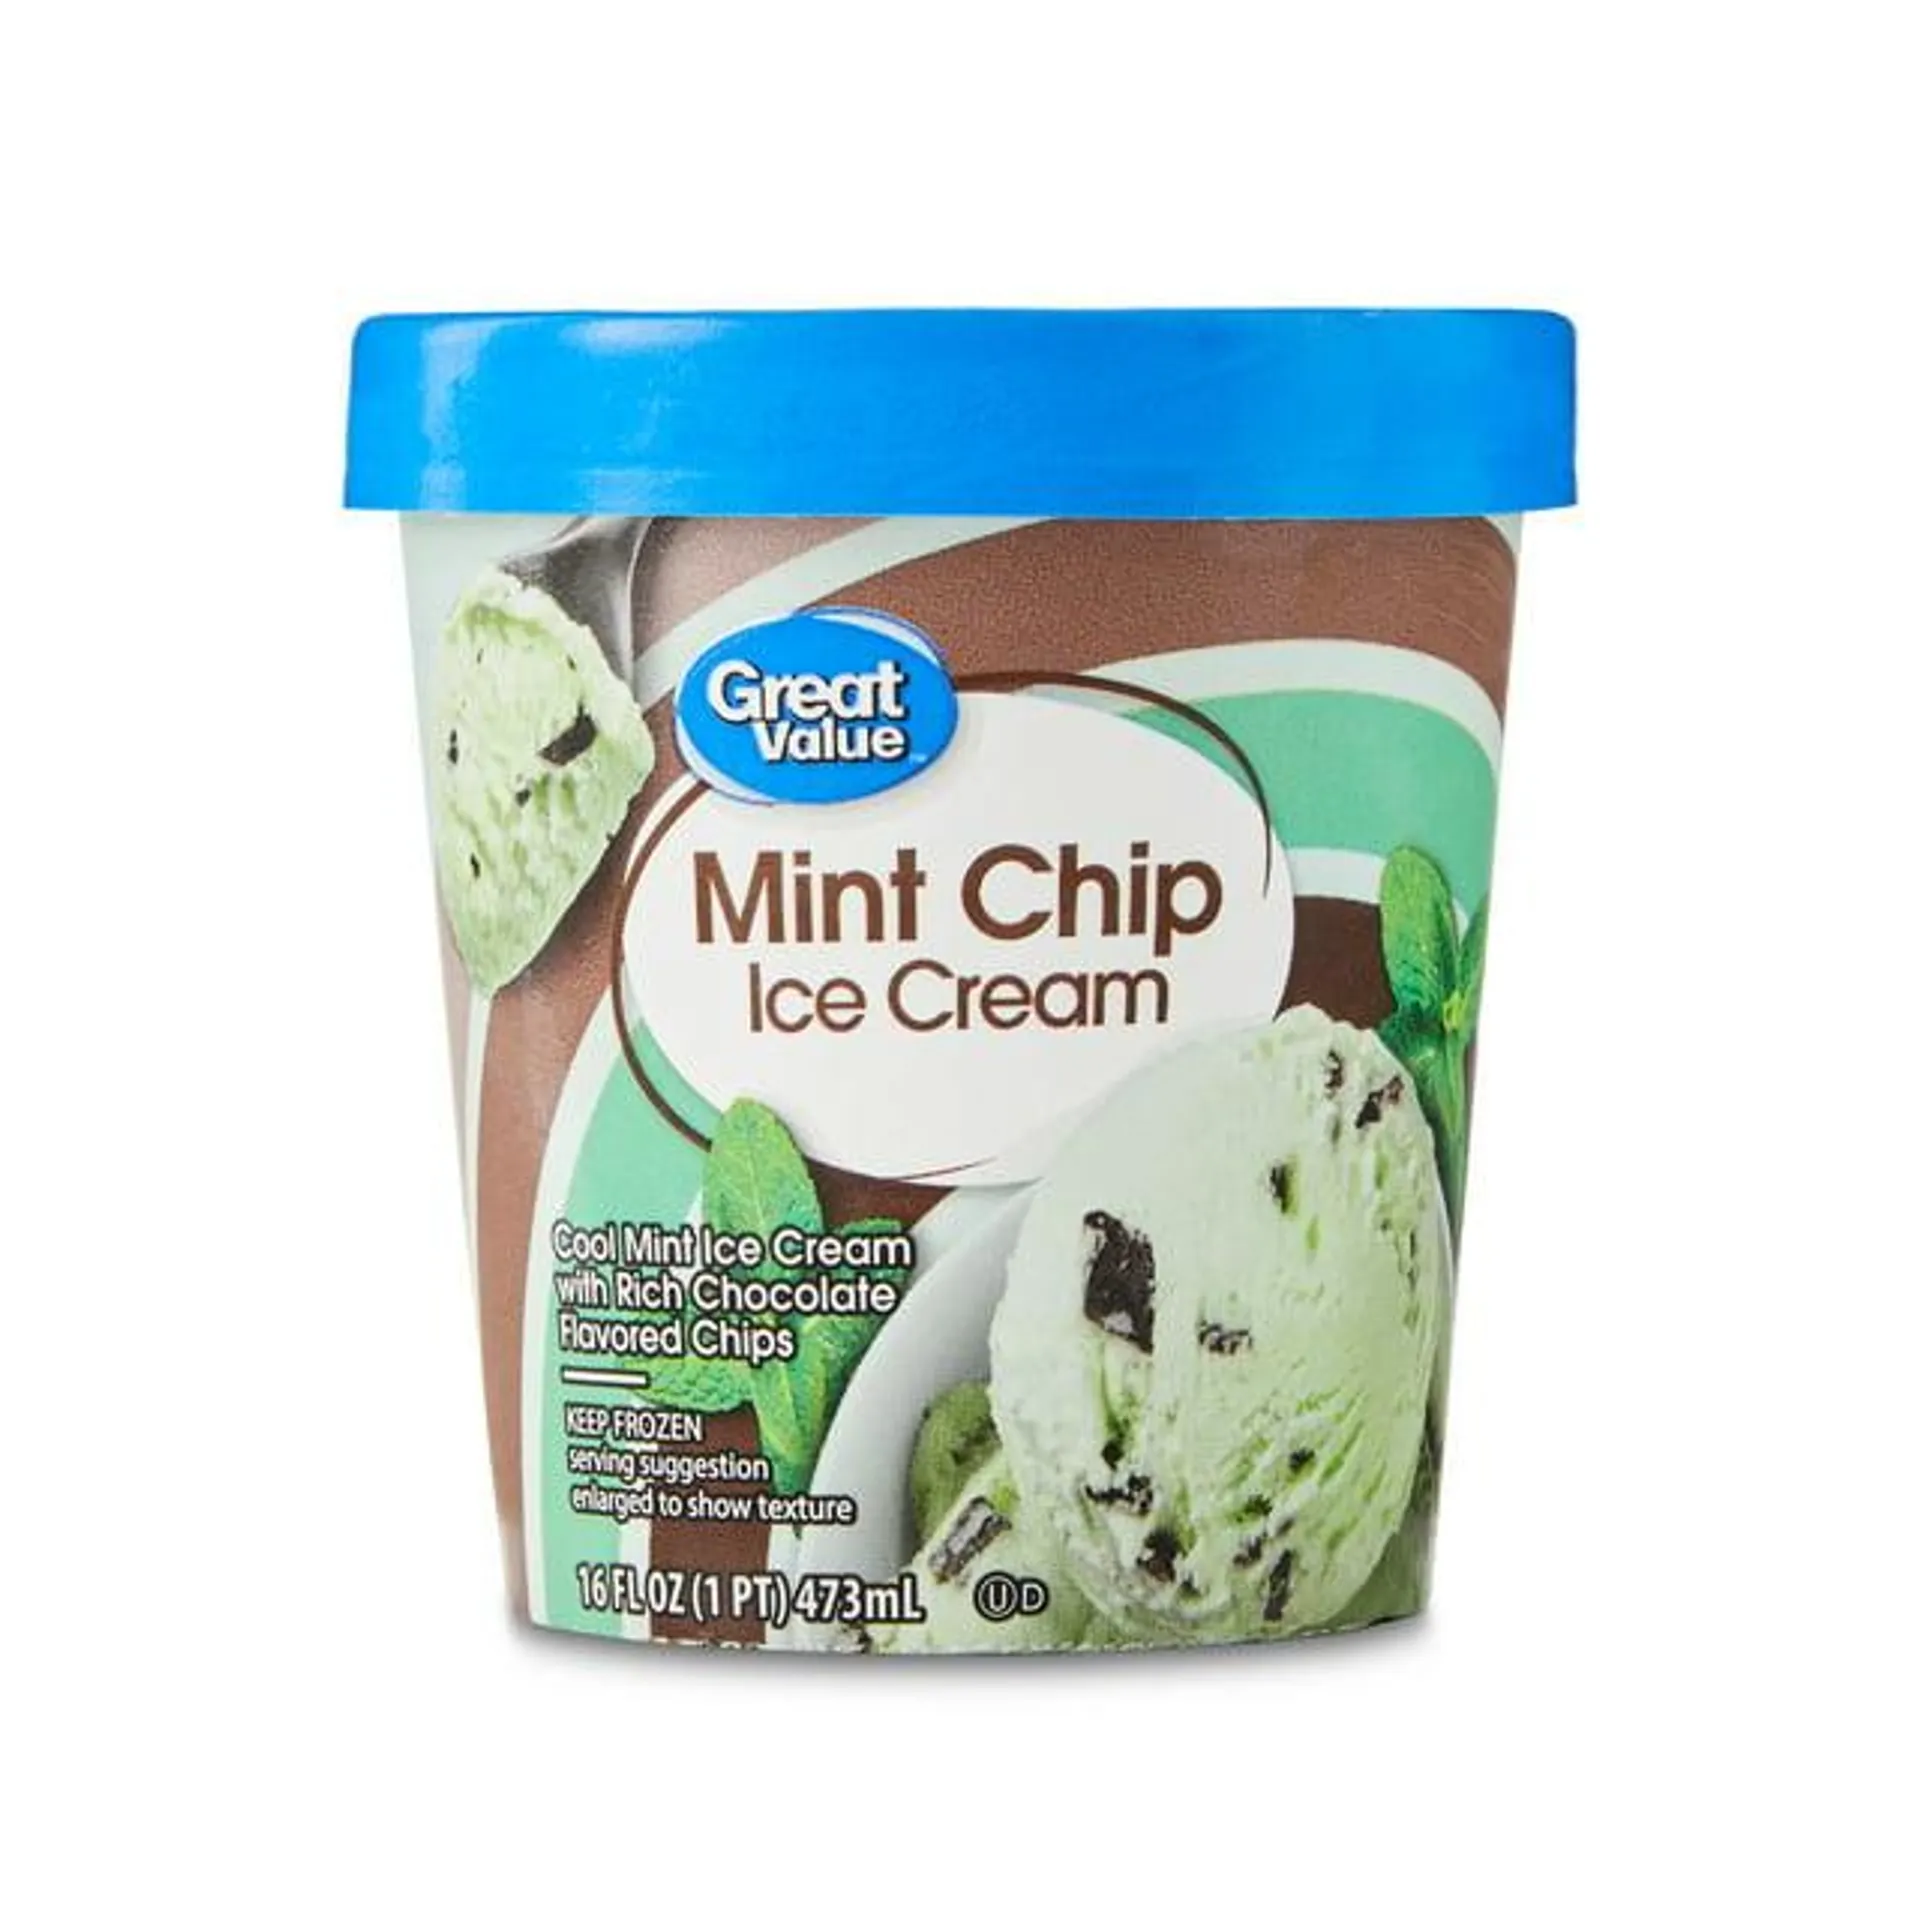 Great Value Mint Chip Ice Cream, 16 fl oz